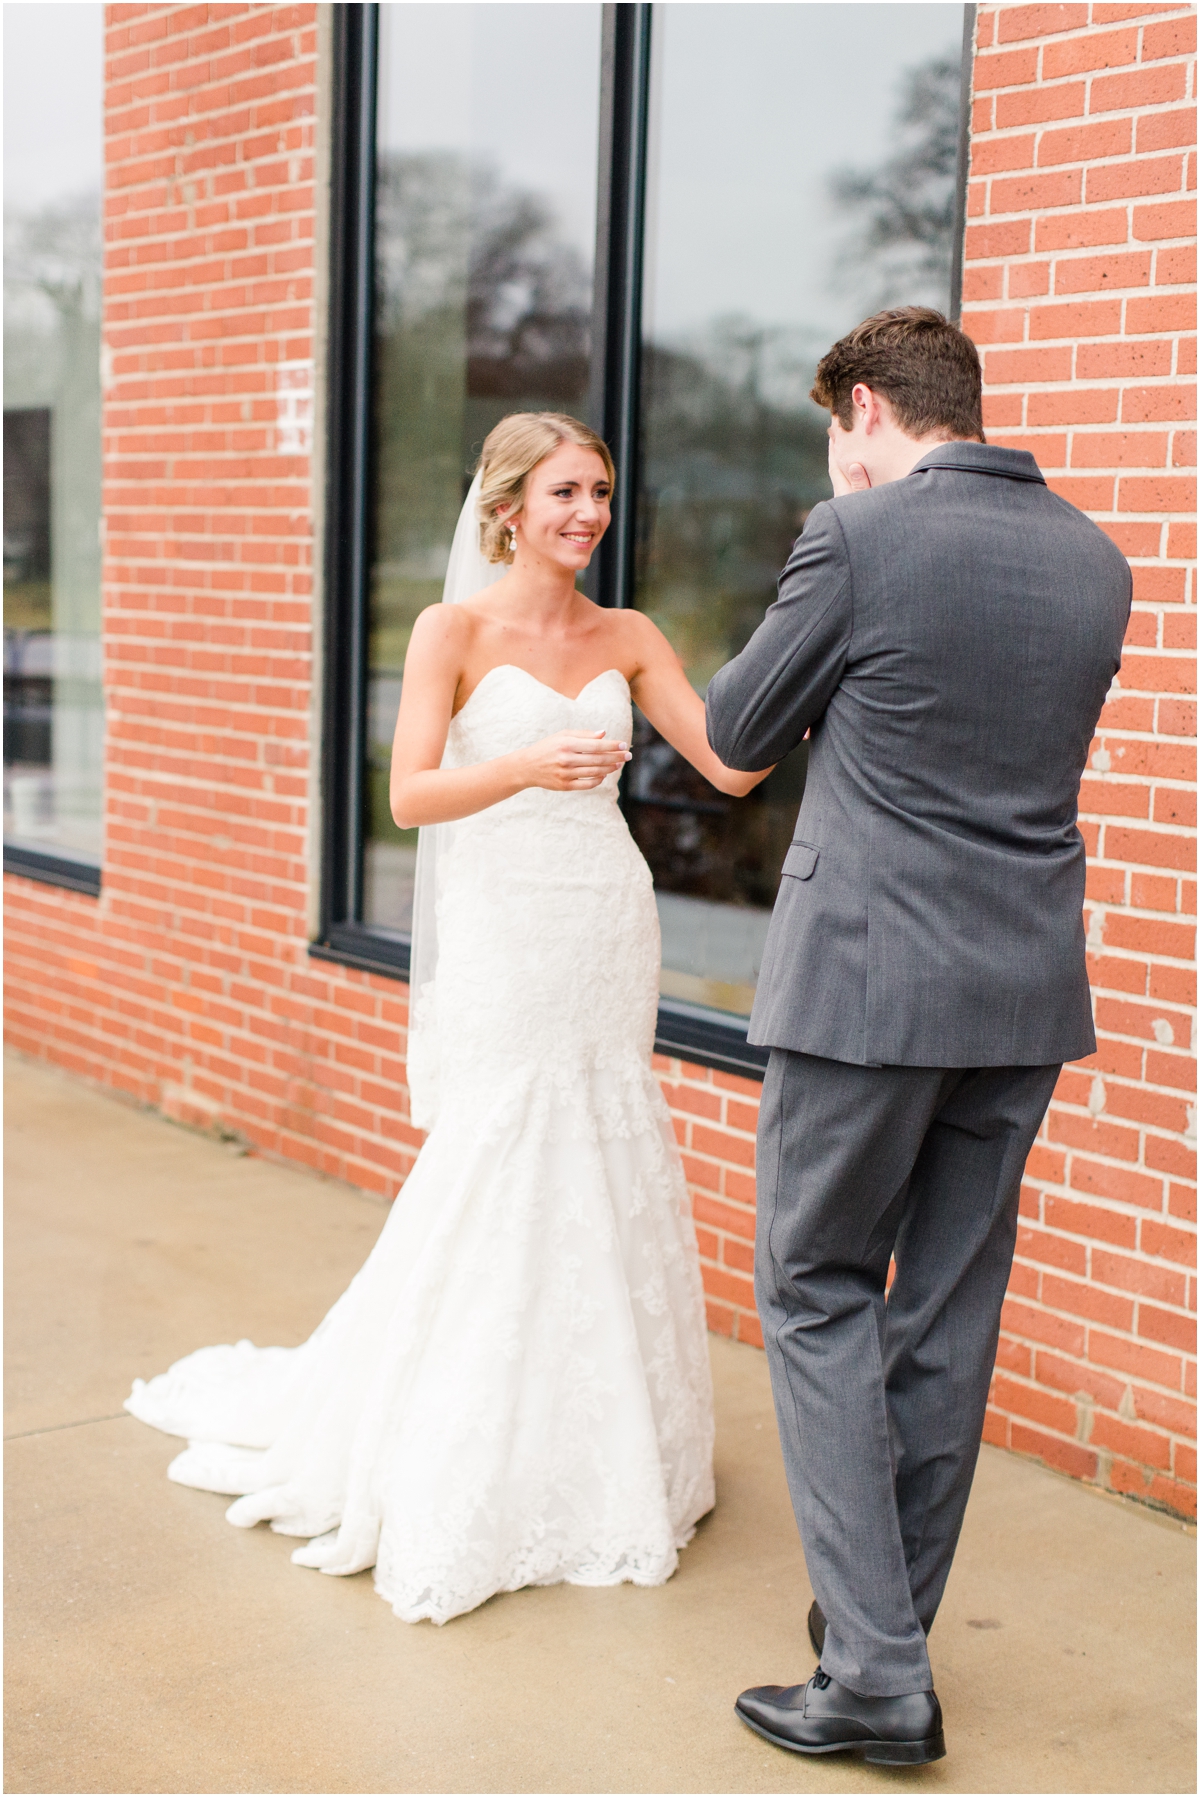 Favorite Moments Captured of 2019 l Greenville, SC Wedding Photographer l Sprinkle Photography